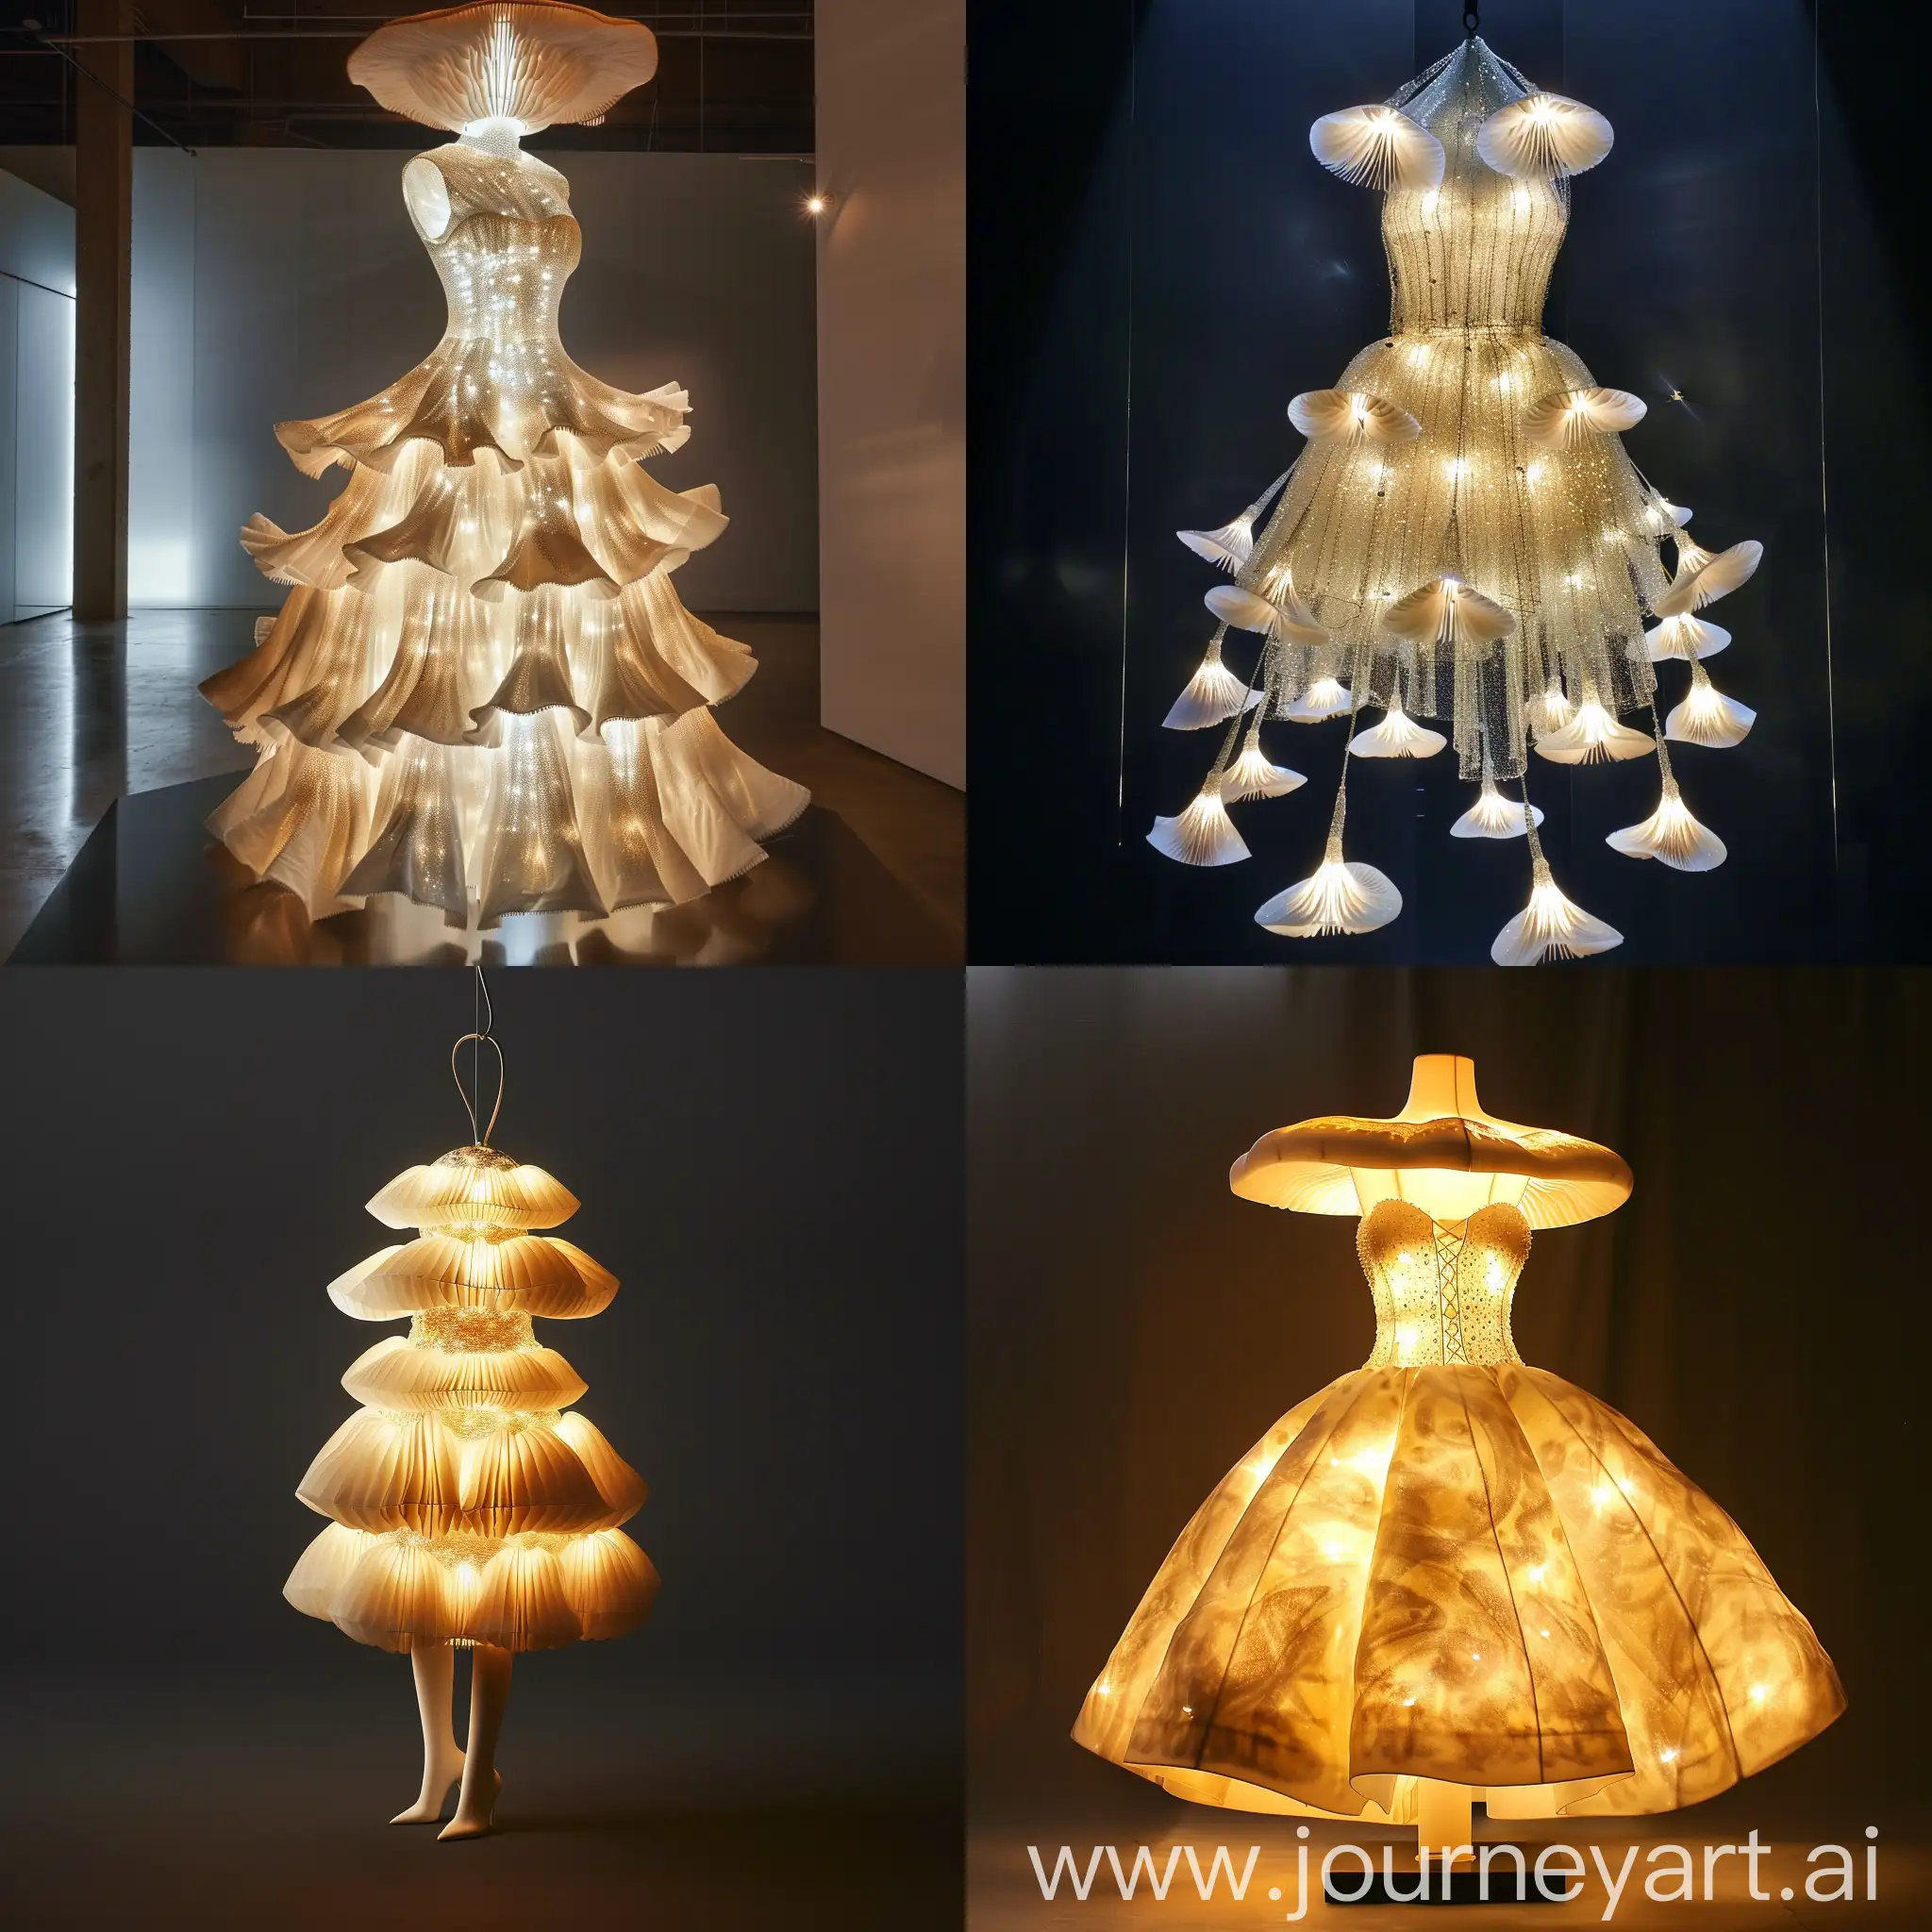 Mushroom-Light-Dress-Inspired-by-Sou-Fujimoto-Futuristic-Fashion-Art